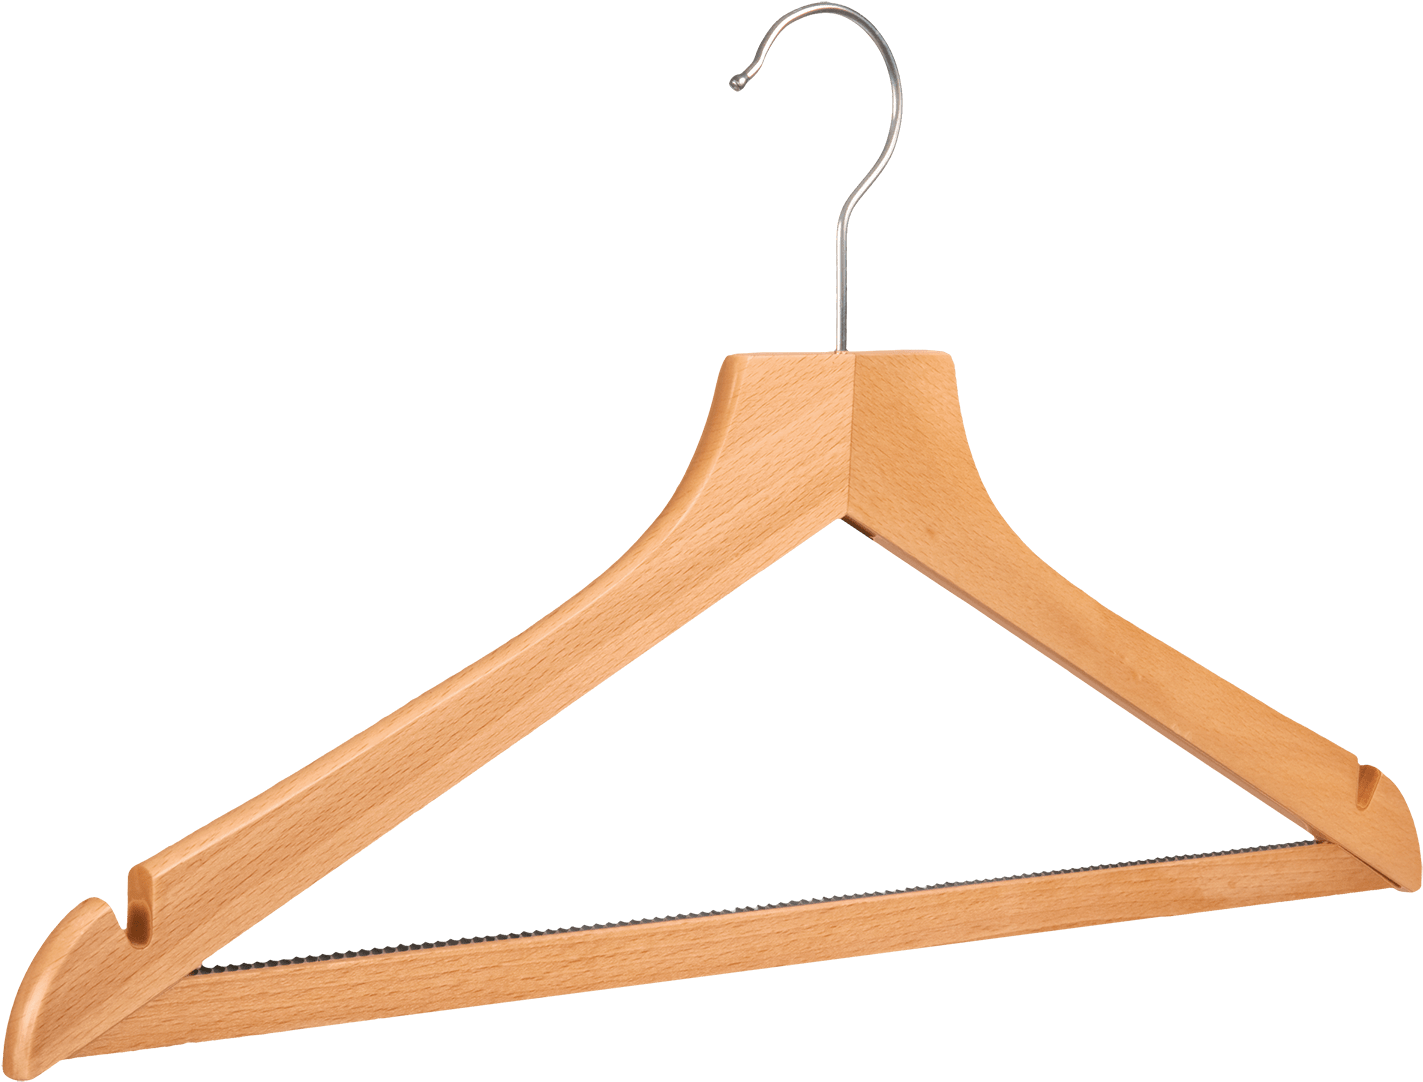 Wooden Clothes Hanger - Clothes Hanger Png (1500x1159)